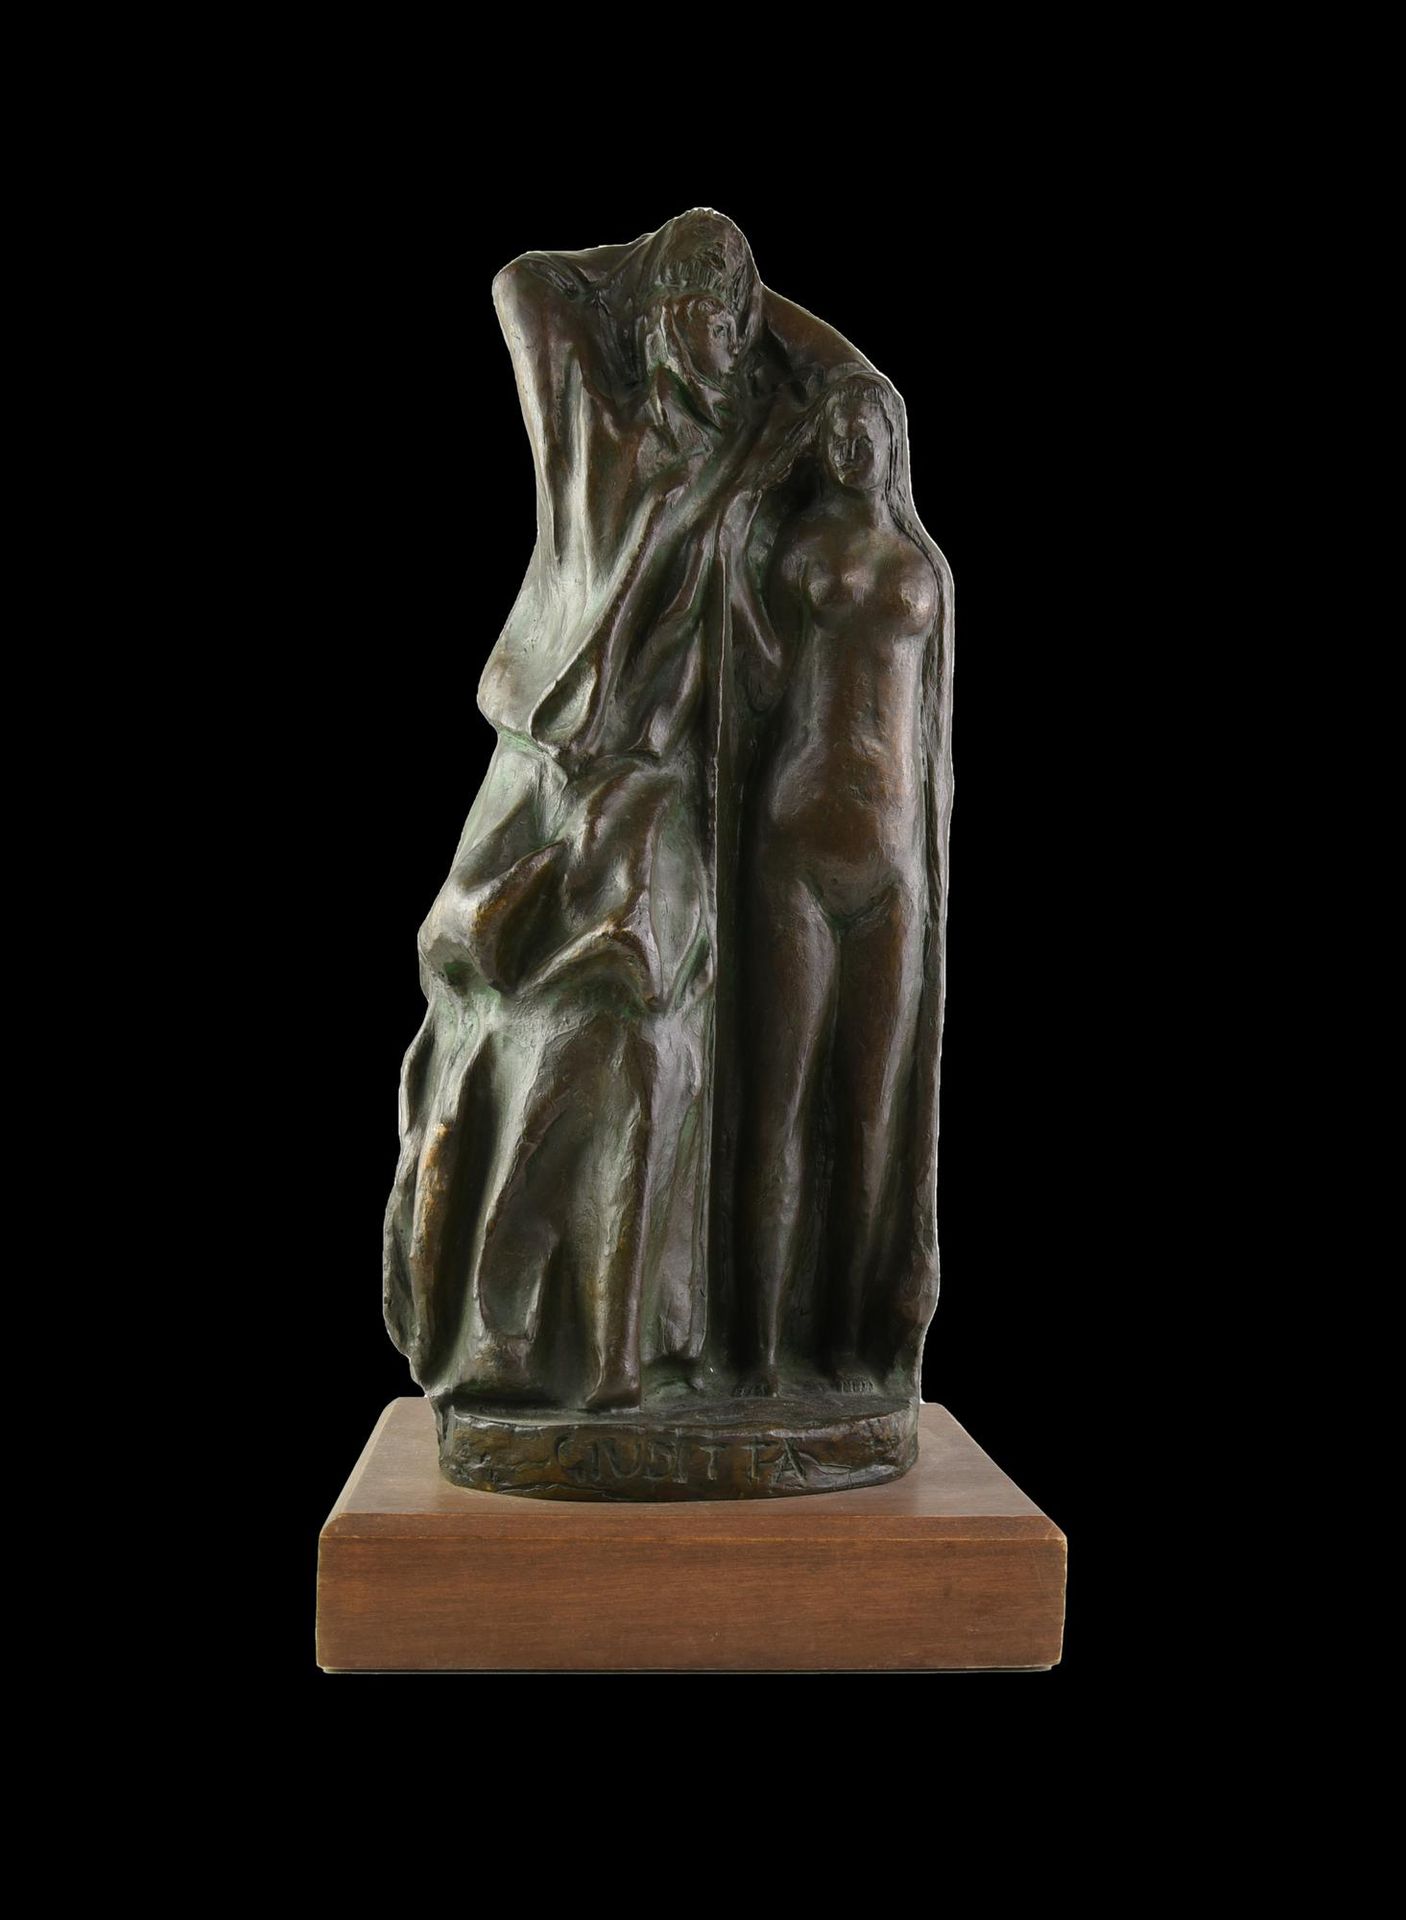 Arturo Martini Arturo Martini

JUDITTA

bronce, 43x17 cm

firma y título



Fund&hellip;